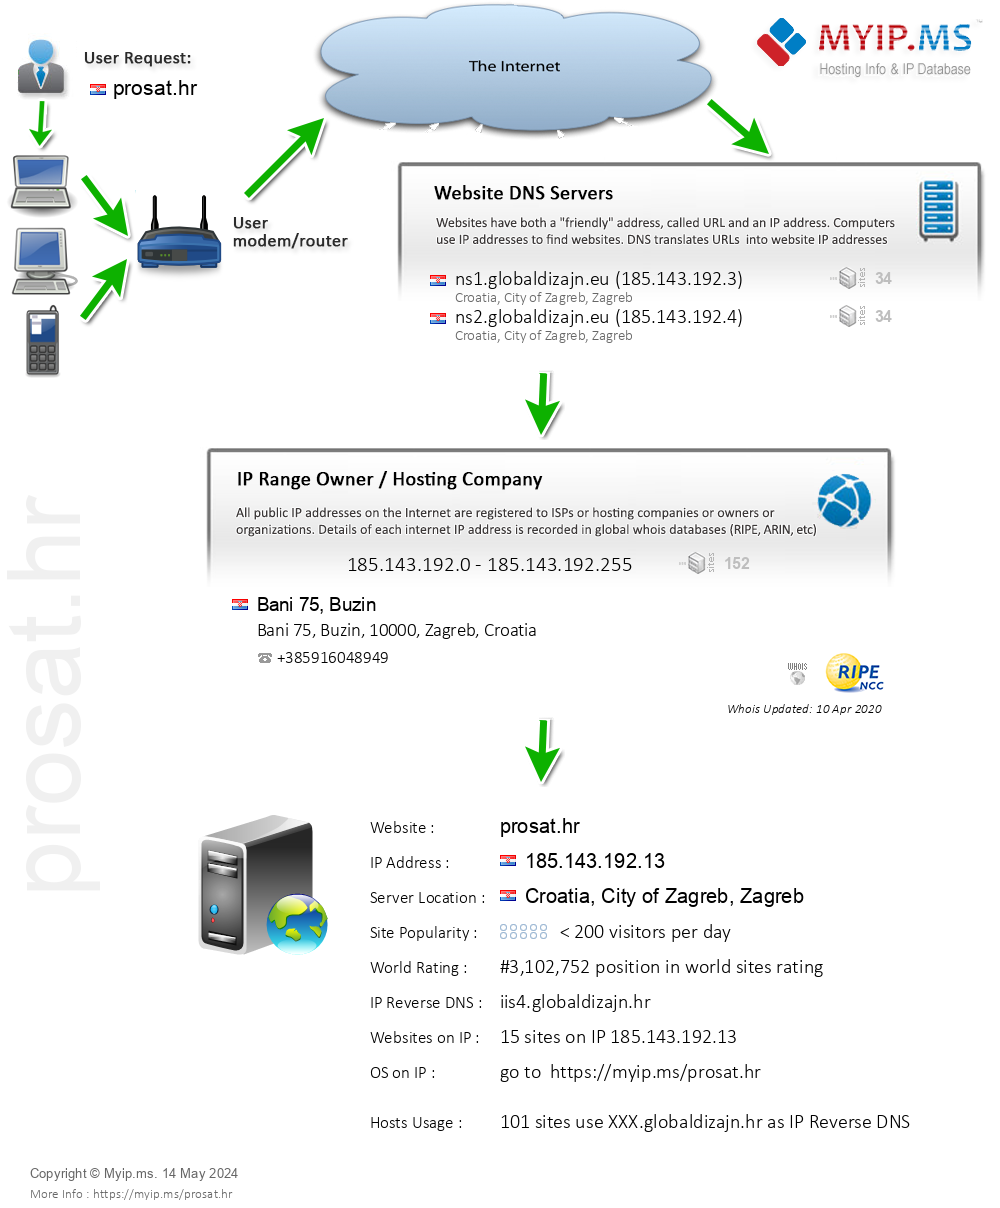 Prosat.hr - Website Hosting Visual IP Diagram